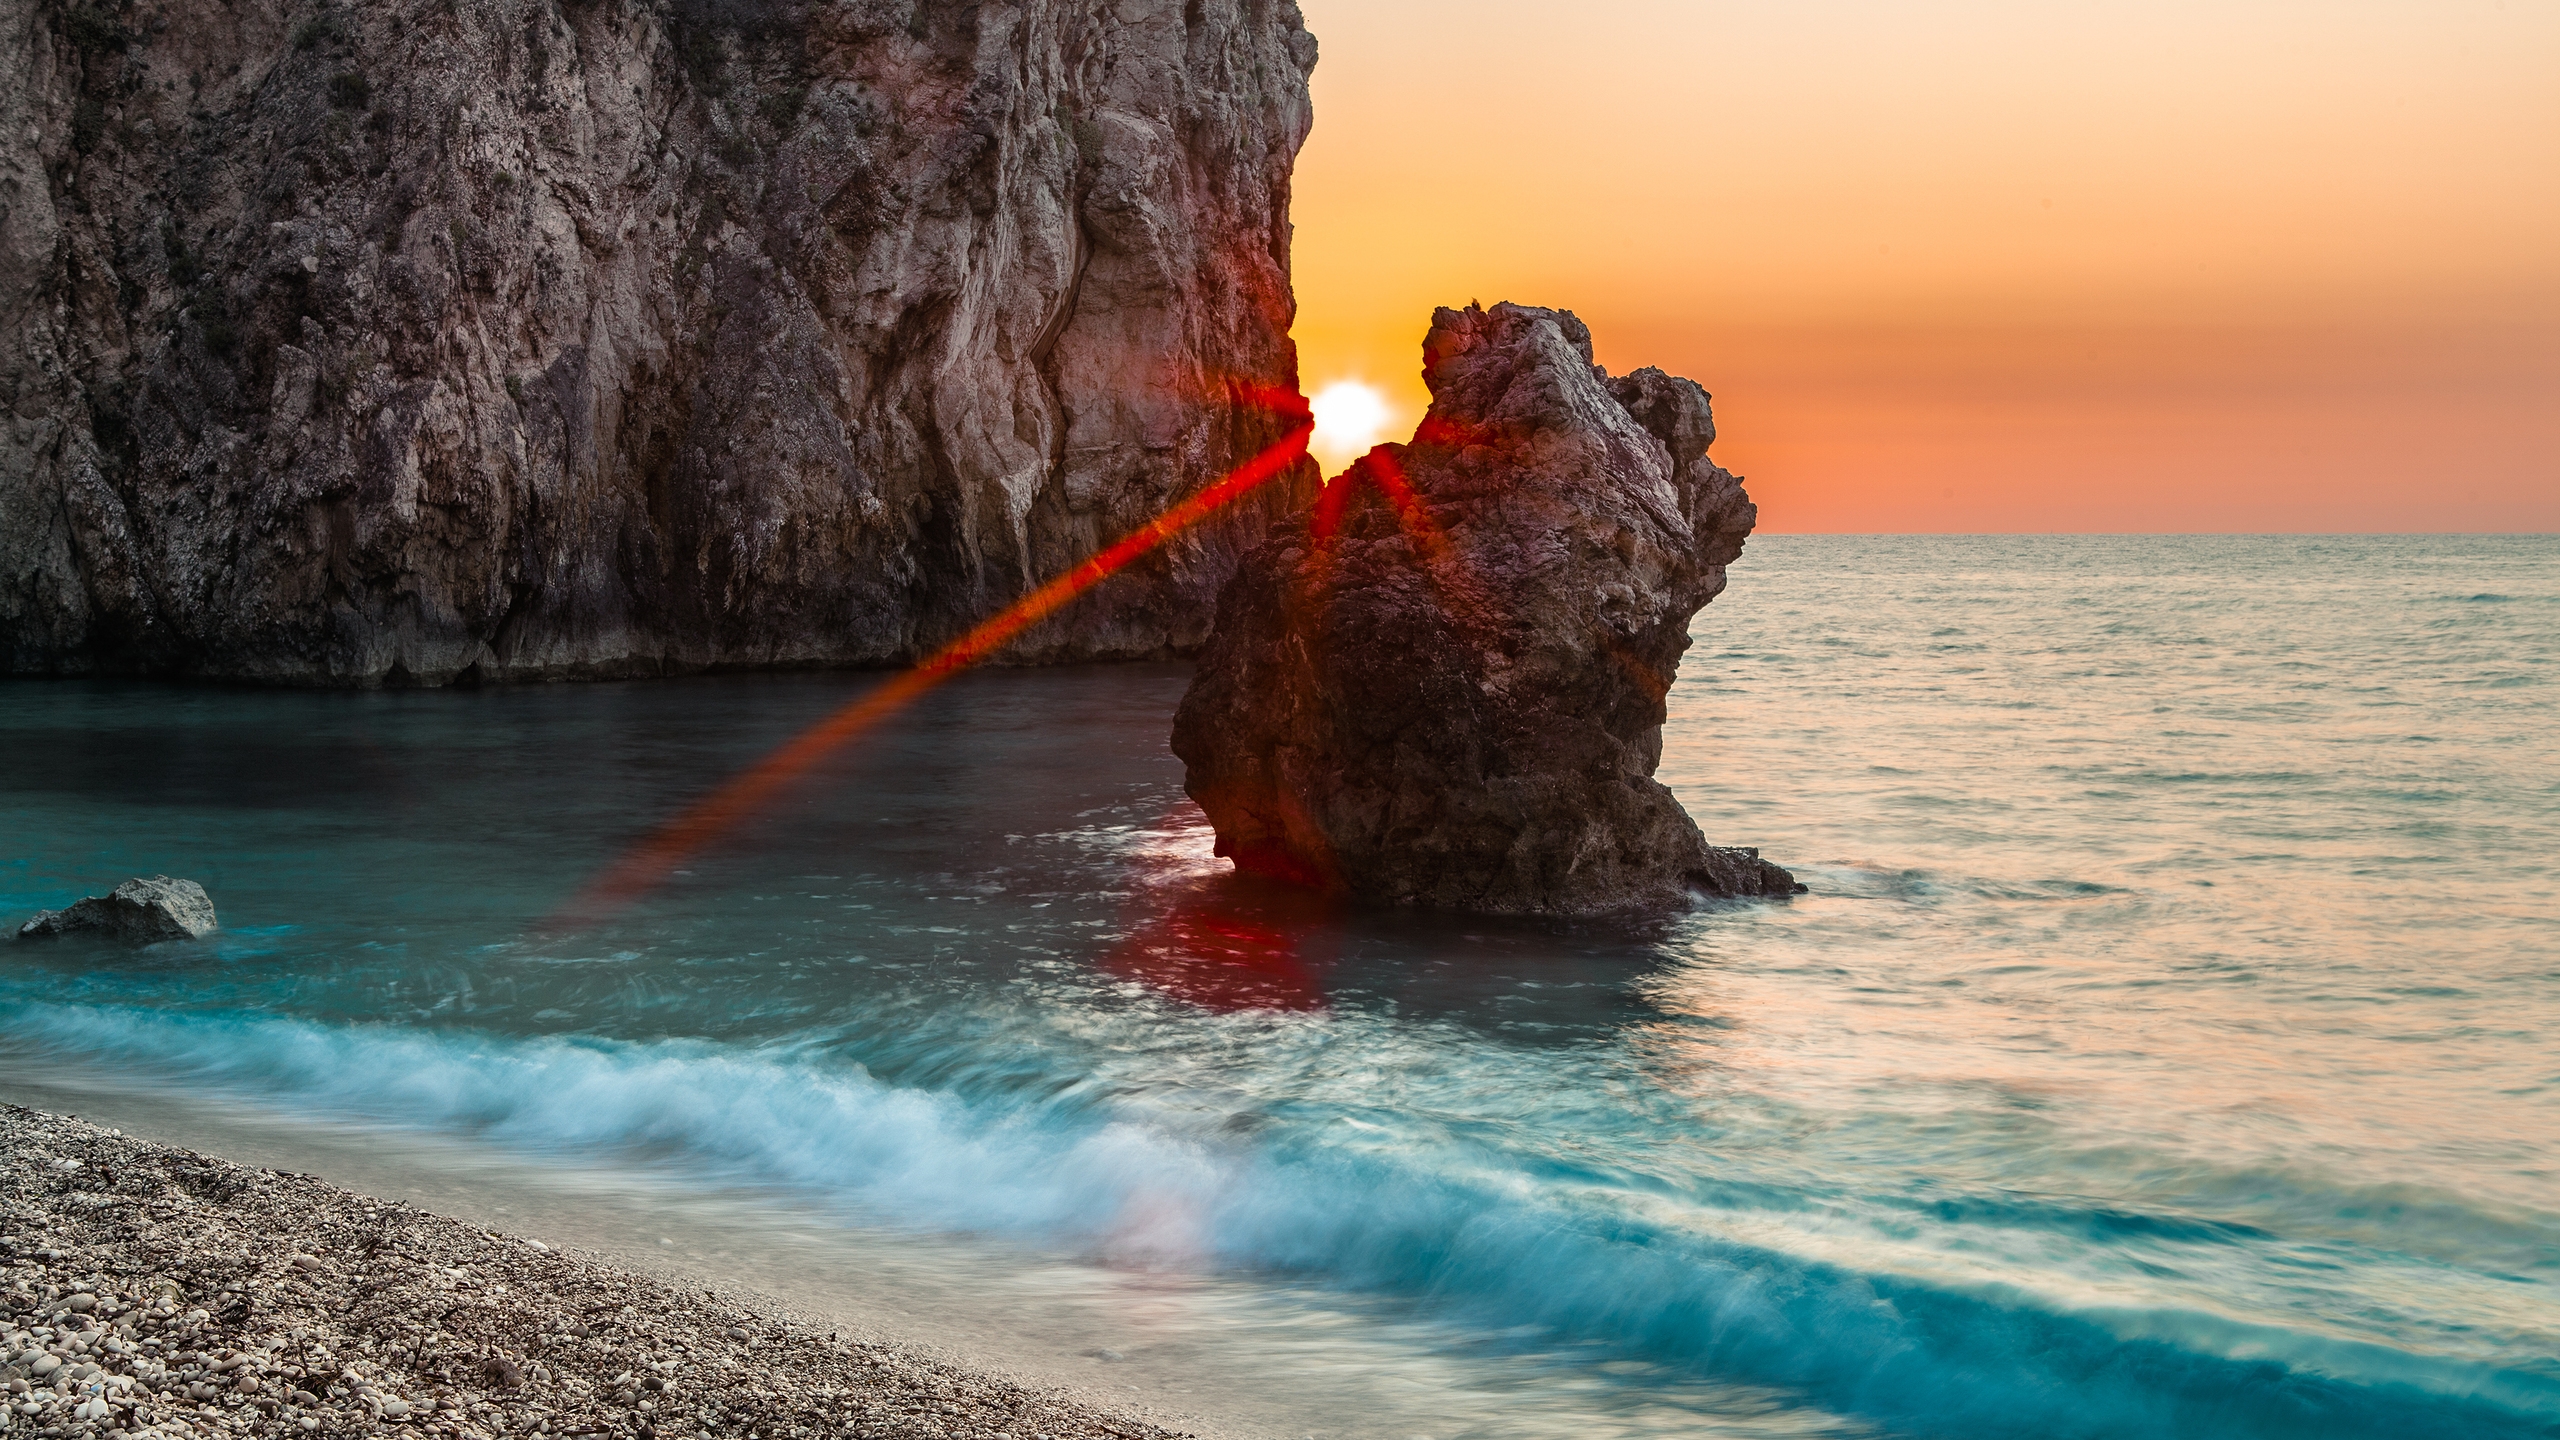 Sunset Between Rocks for 2560x1440 HDTV resolution